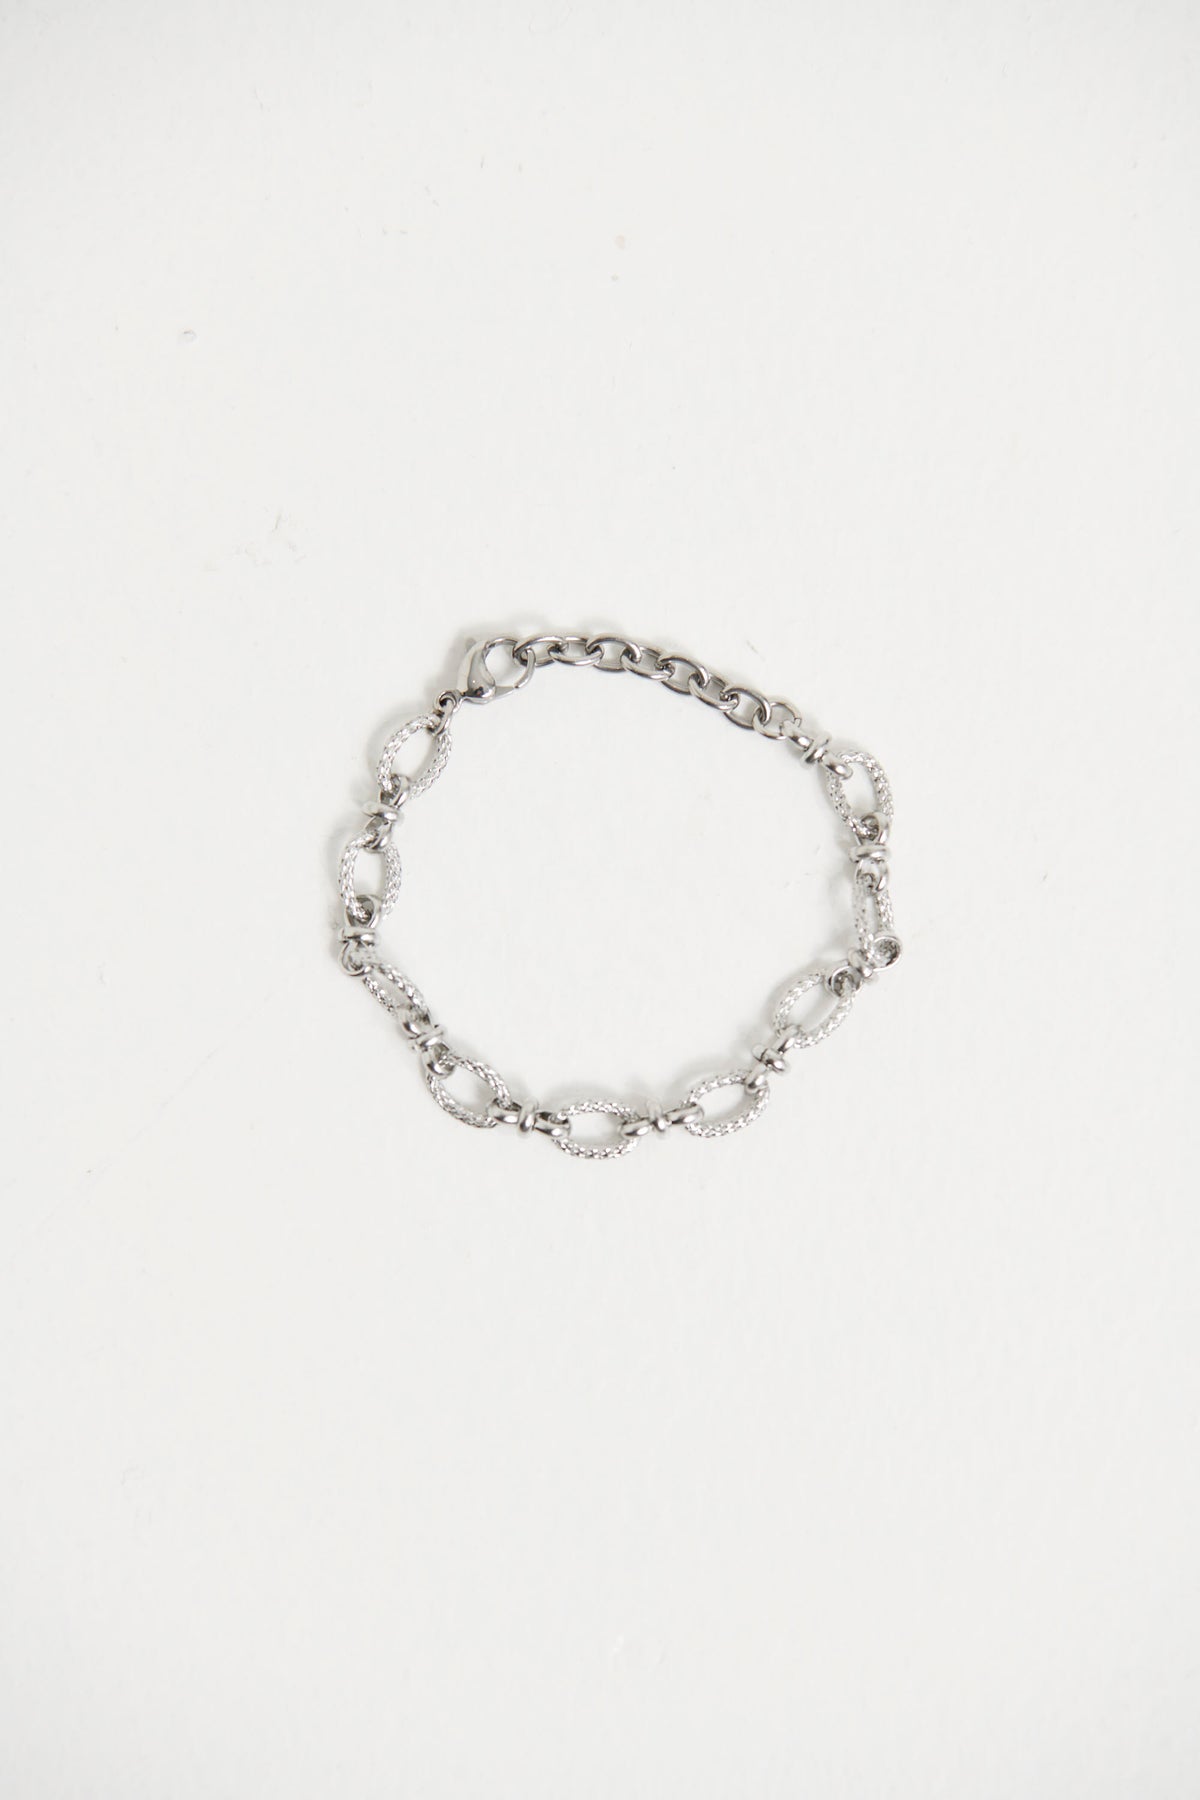 NTH Levi Chain Bracelet Silver